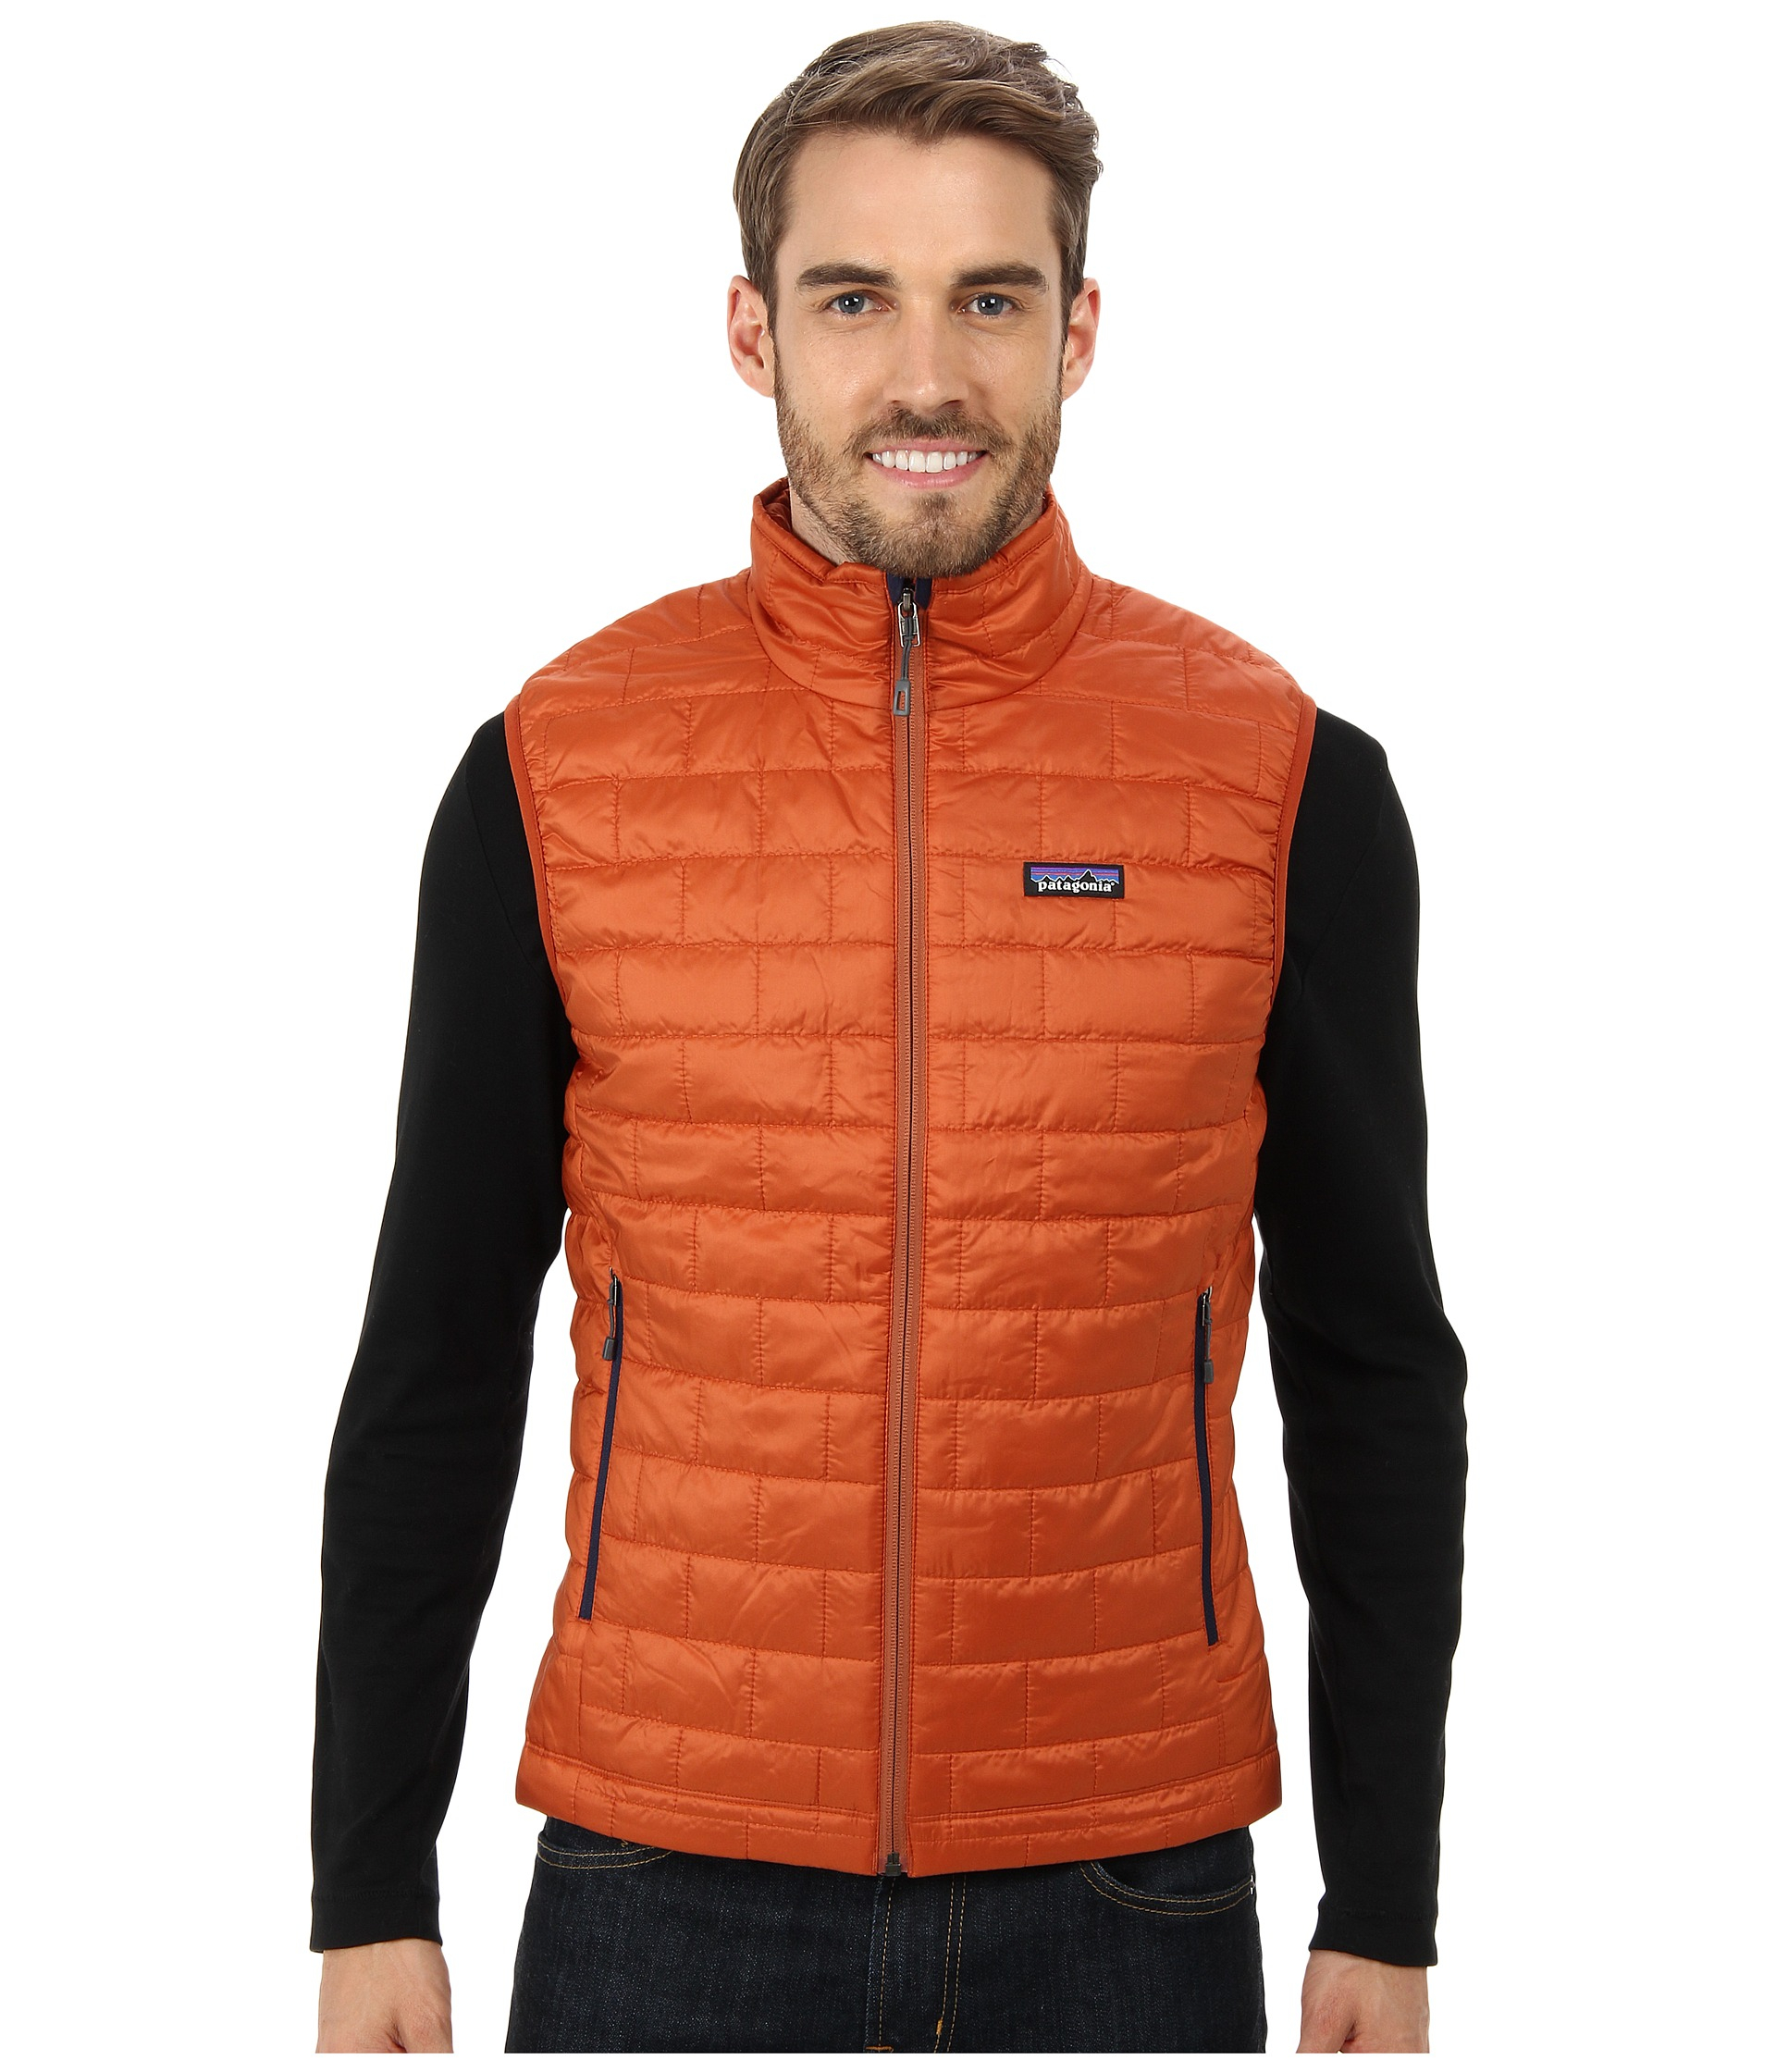 Patagonia Nano Puff® Vest in Orange for Men - Lyst